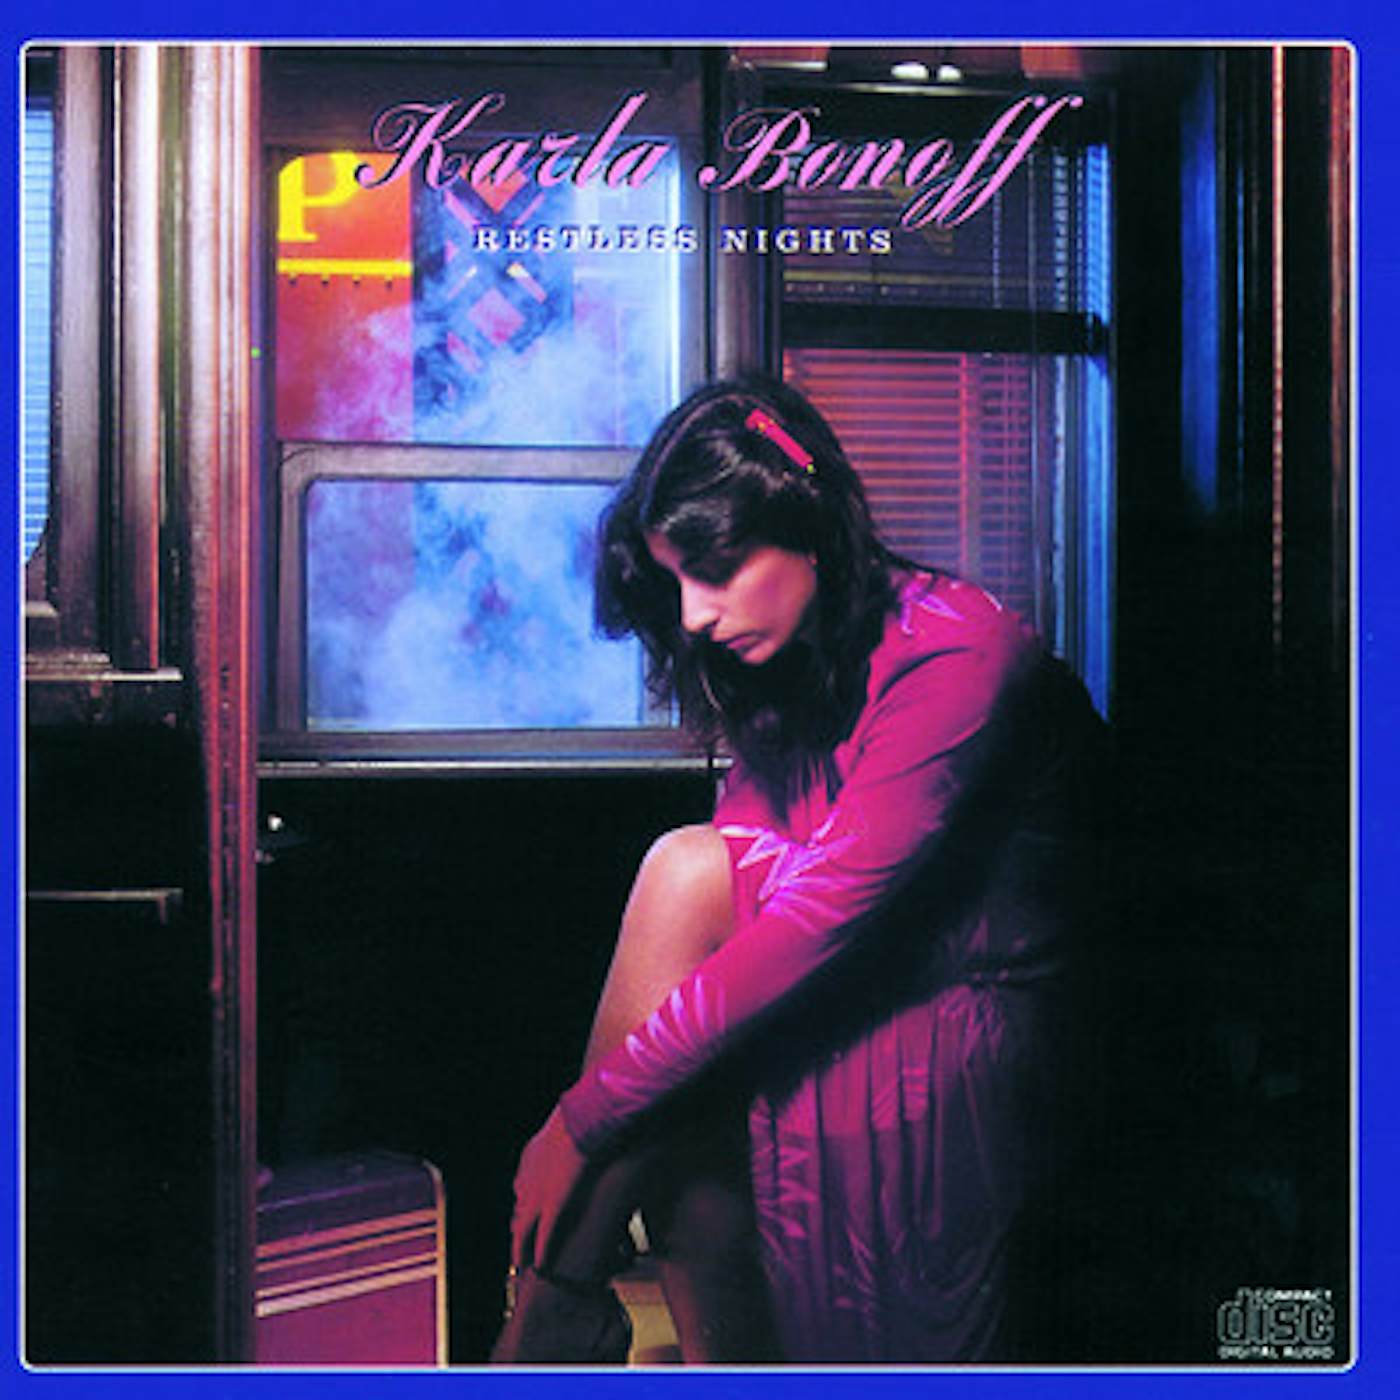 Karla Bonoff RESTLESS NIGHTS CD